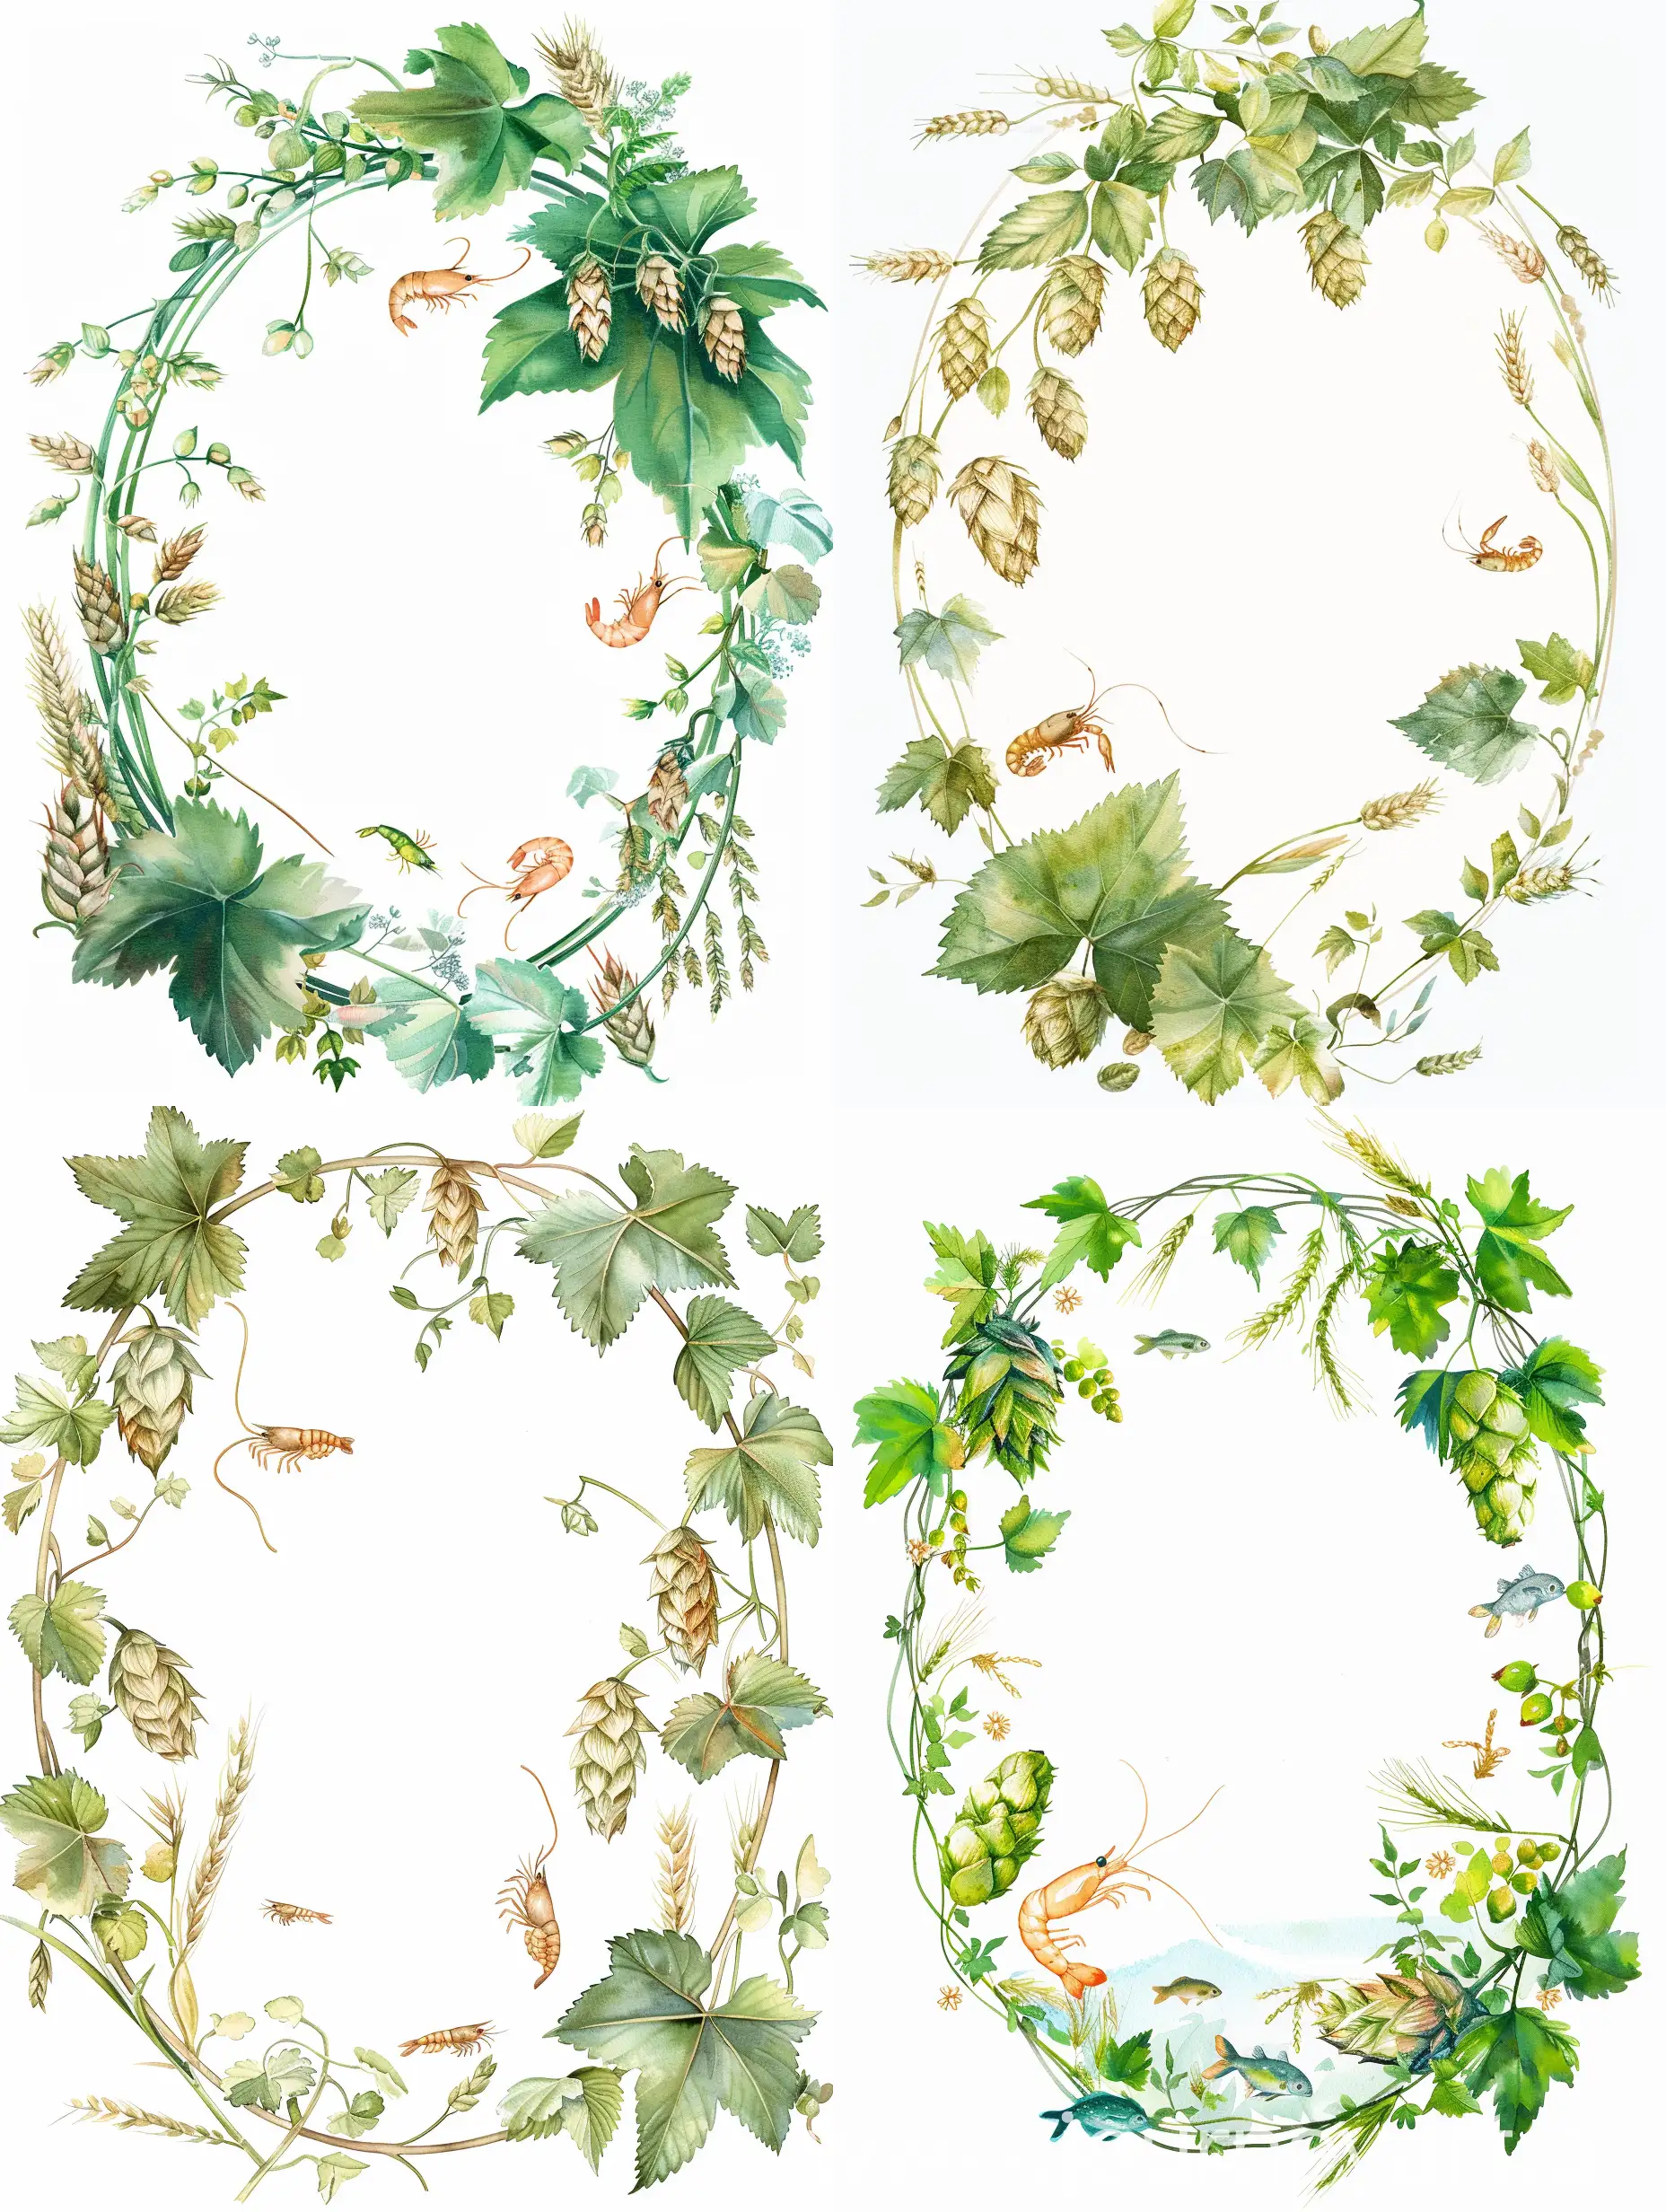 Botanical-Elegance-Oval-Frame-with-Hop-Leaves-Barley-and-Marine-Elements